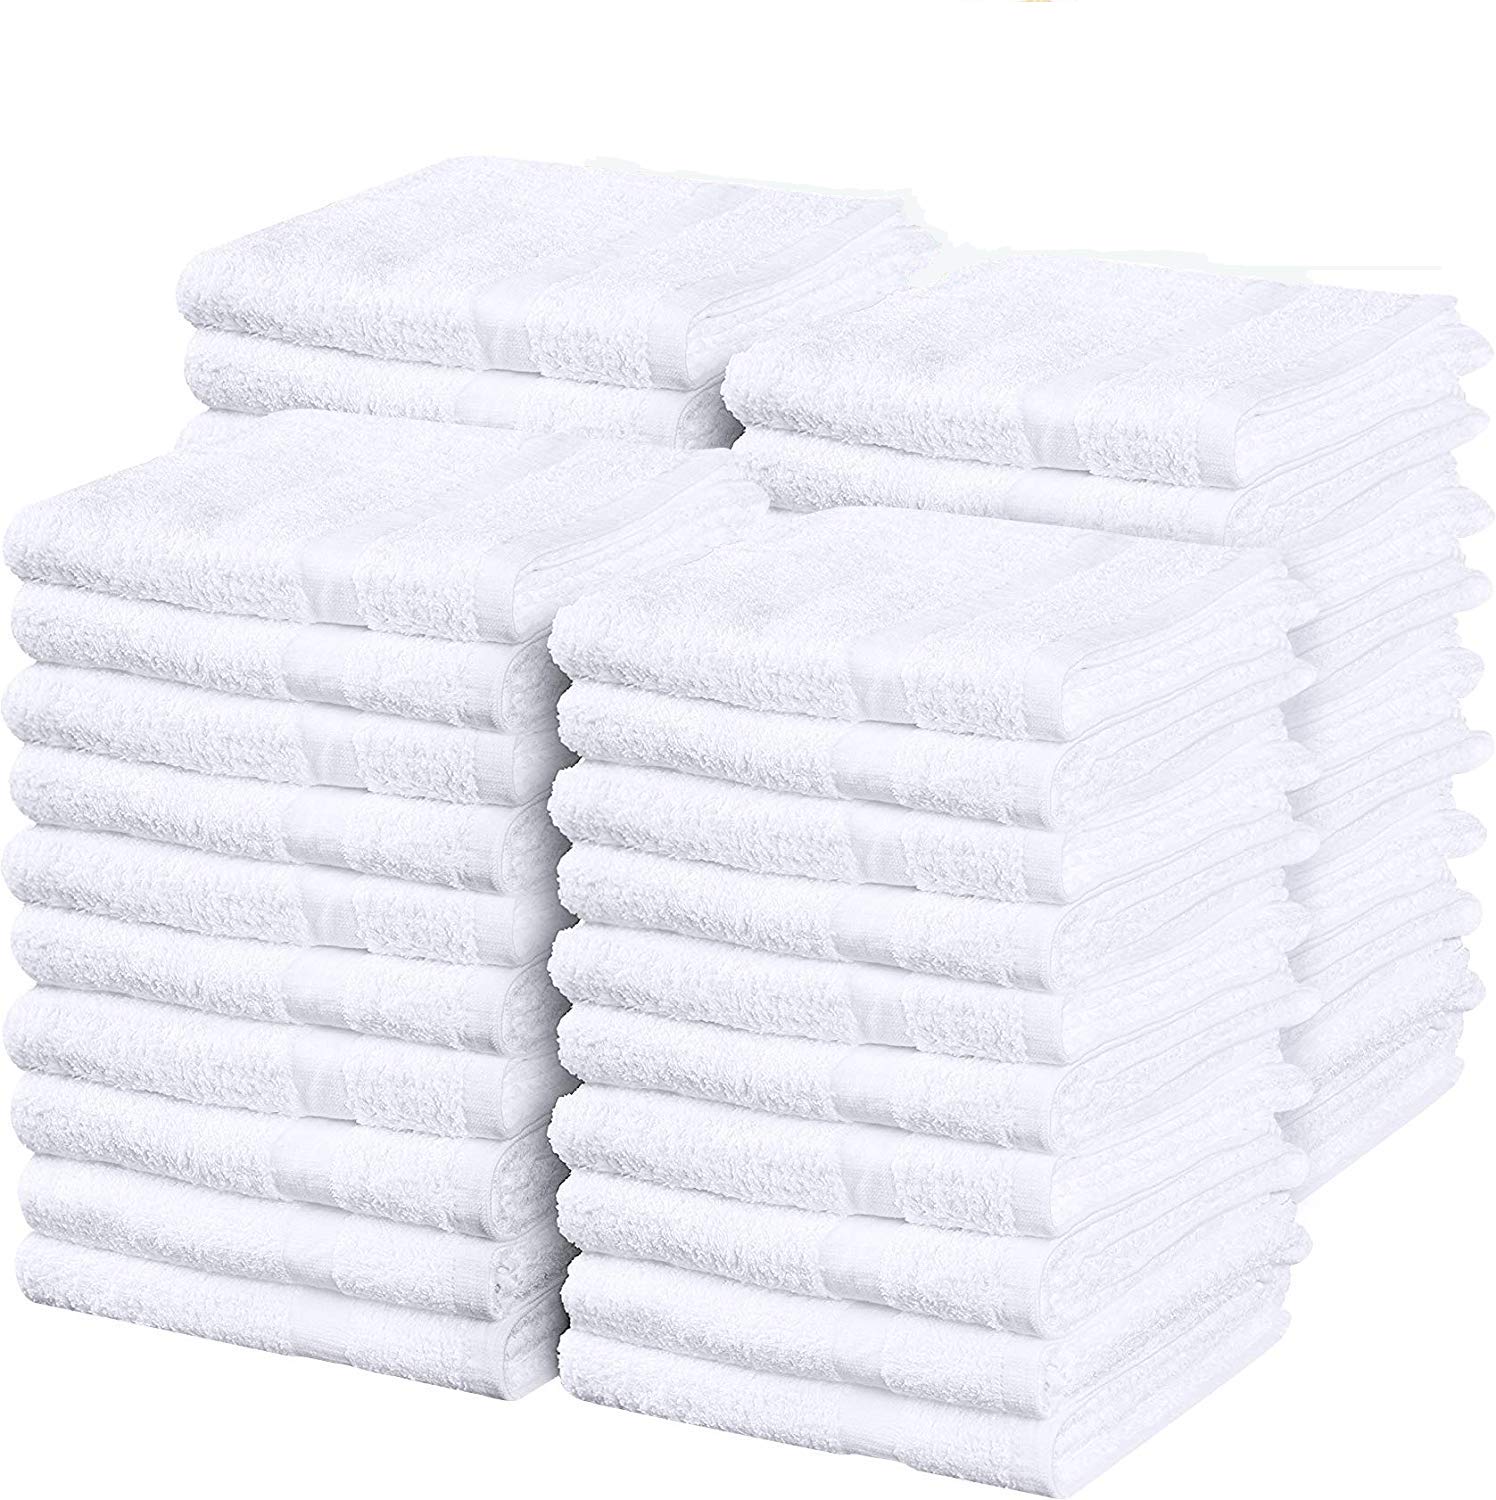 Simpli-Magic 79118 Commercial Grade Soft Plush Cotton Terry Towels